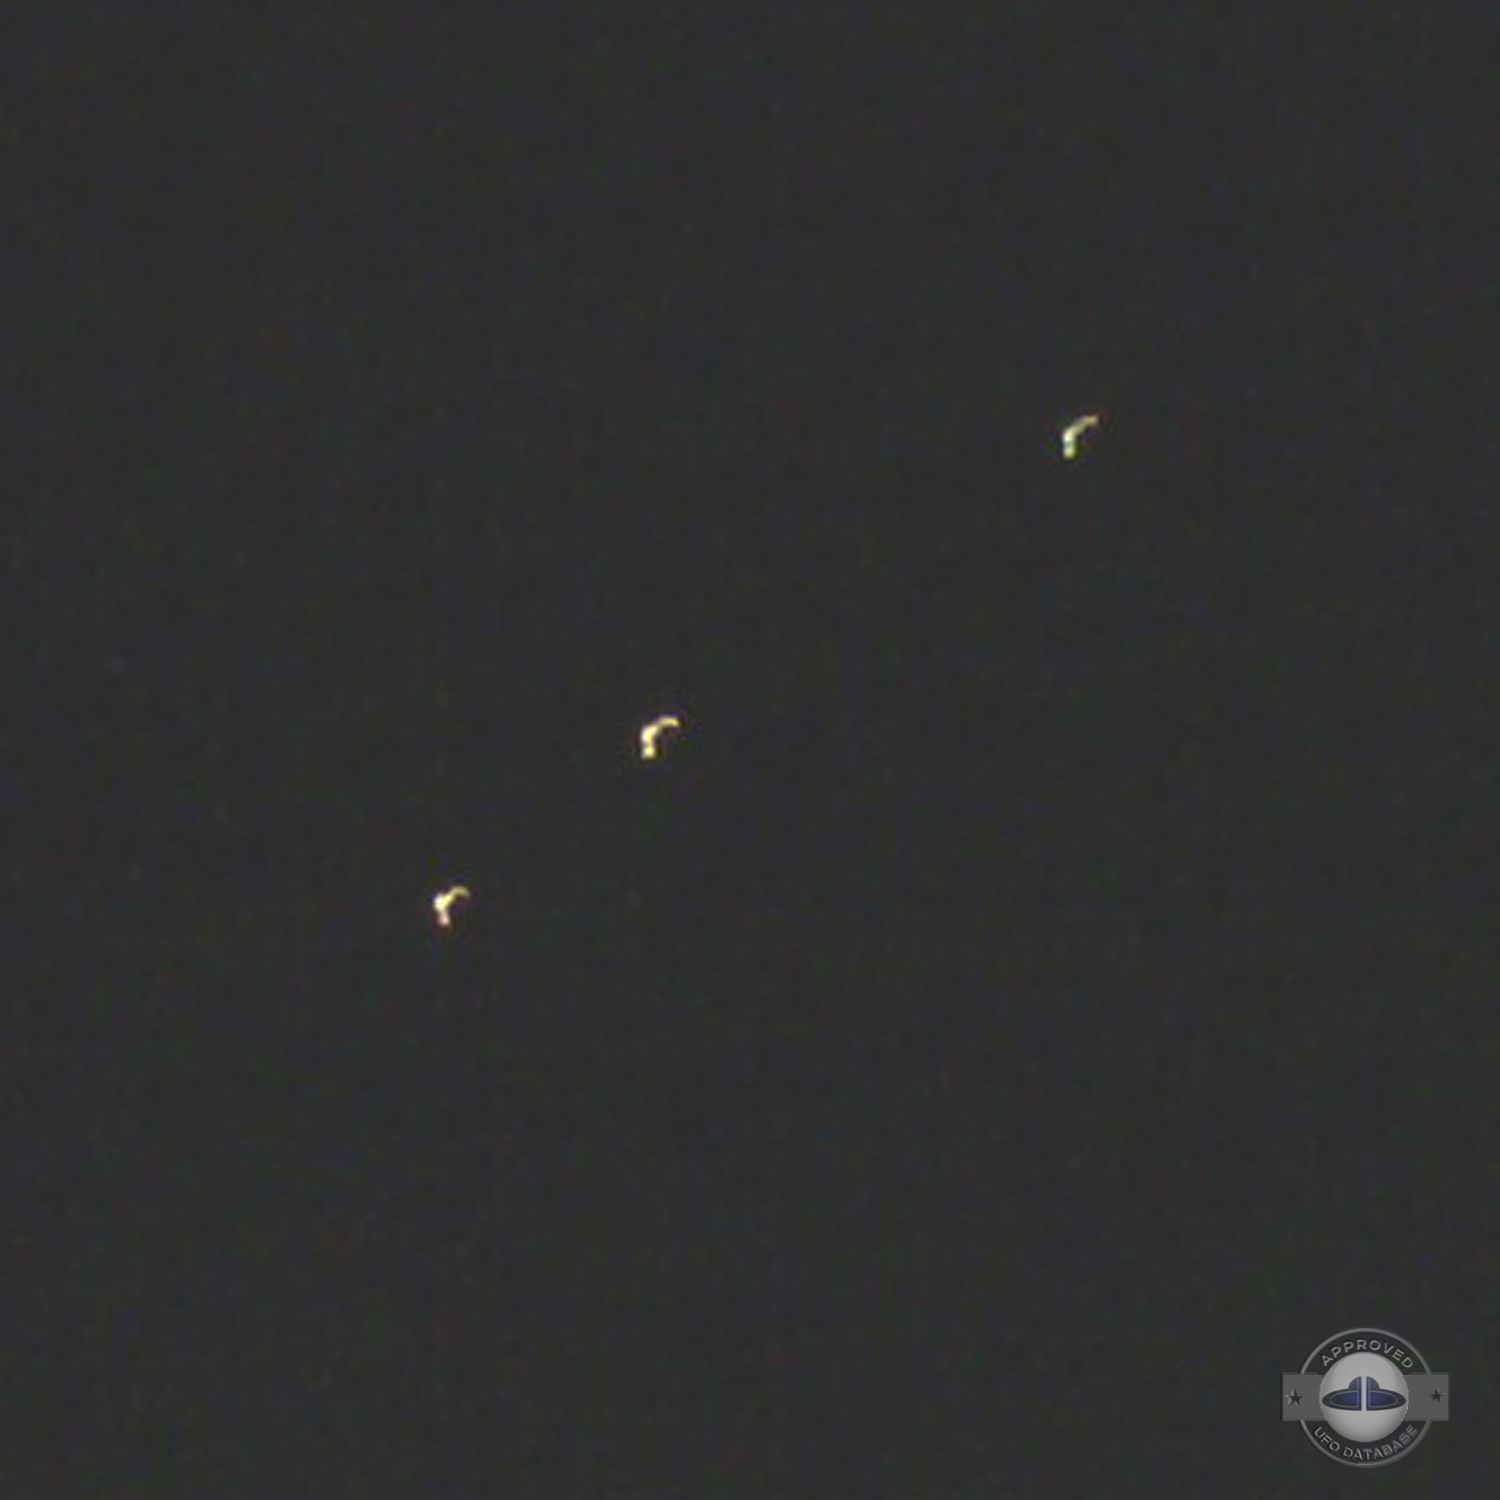 Fleet of three Boomerang UFOs passing over Granados, Mexico 2012 UFO Picture #476-2